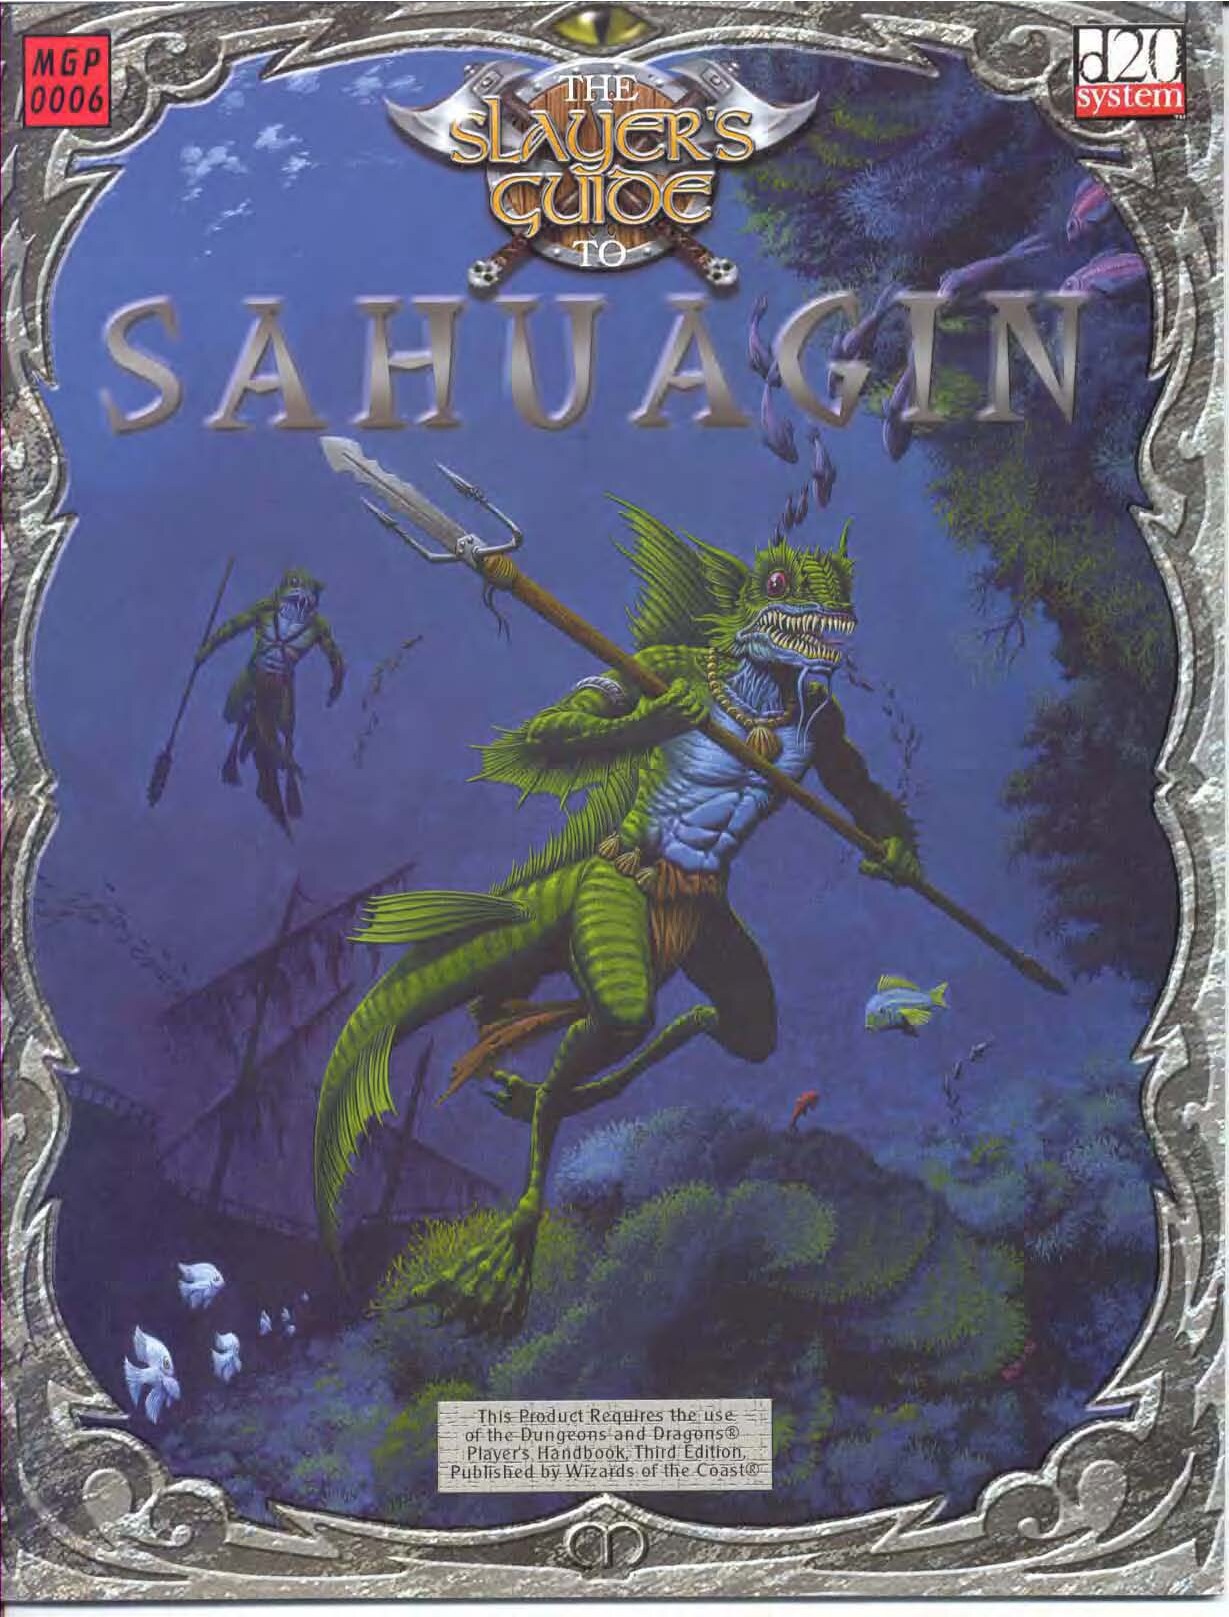 The Slayer's Guide to Sahuagin